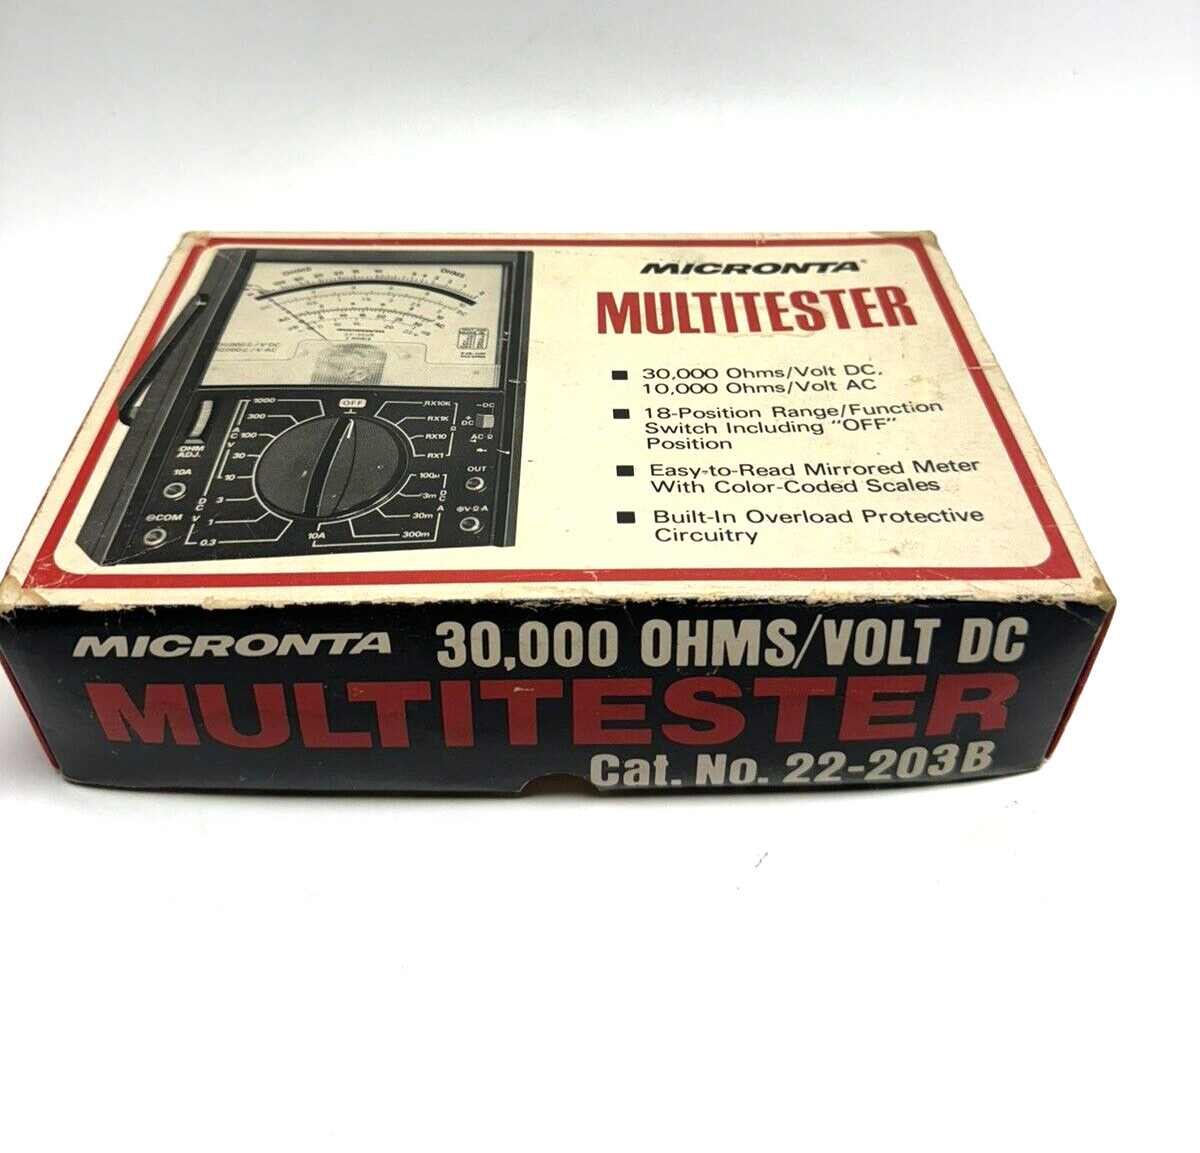 VINTAGE NOS MICRONTA MULTITESTER No. 22-203B RADIO SHACK 30,000 Ohms/Volt DC